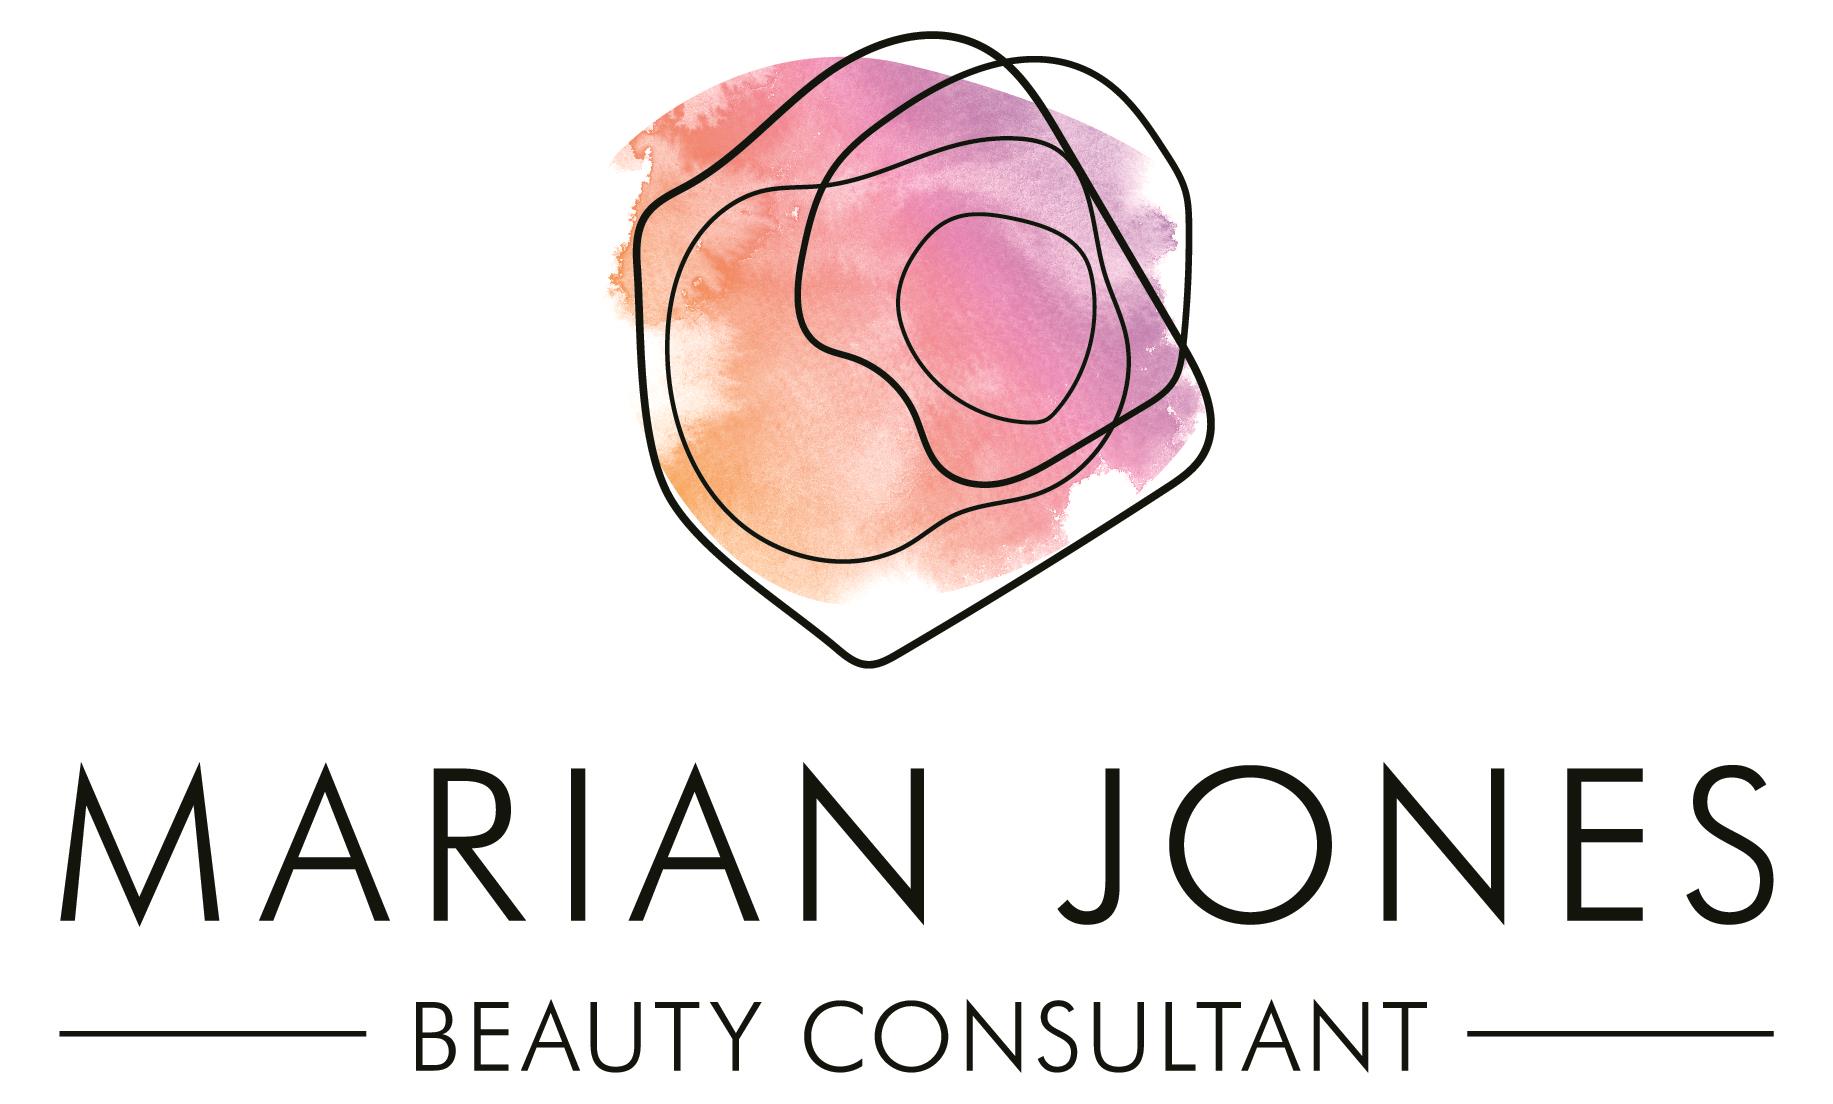 Marian Jones beauty